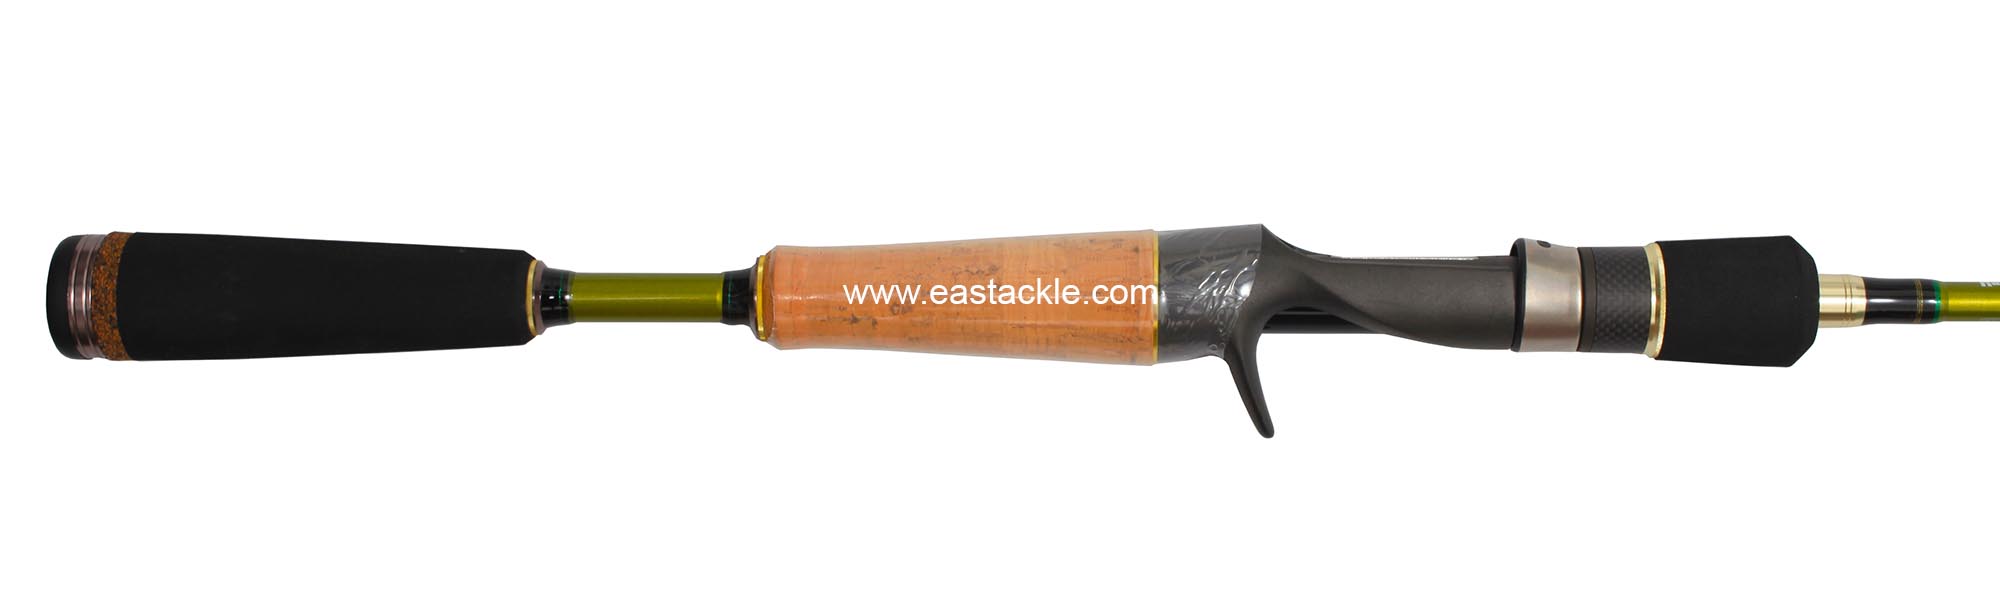 Rapala - Koivu - KVC652M - Bait Casting Rod - Handle Section (Side View) | Eastackle